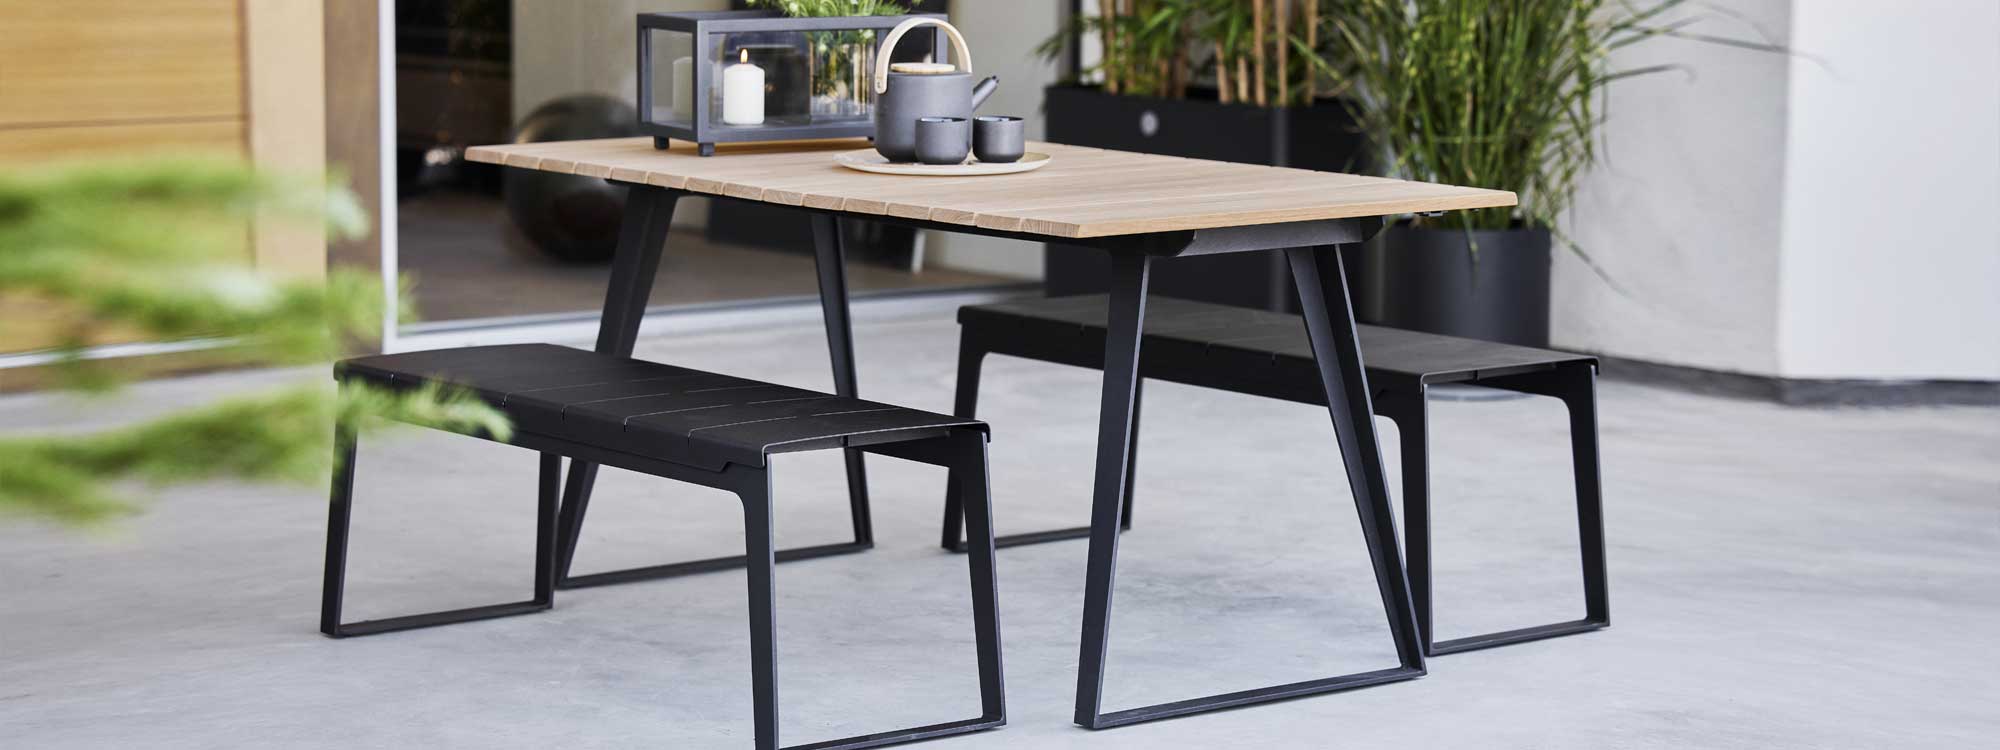 Image of pair of Copenhagen bench seats & Copenhagen dining table with teak top by Cane-line outdoor furniture